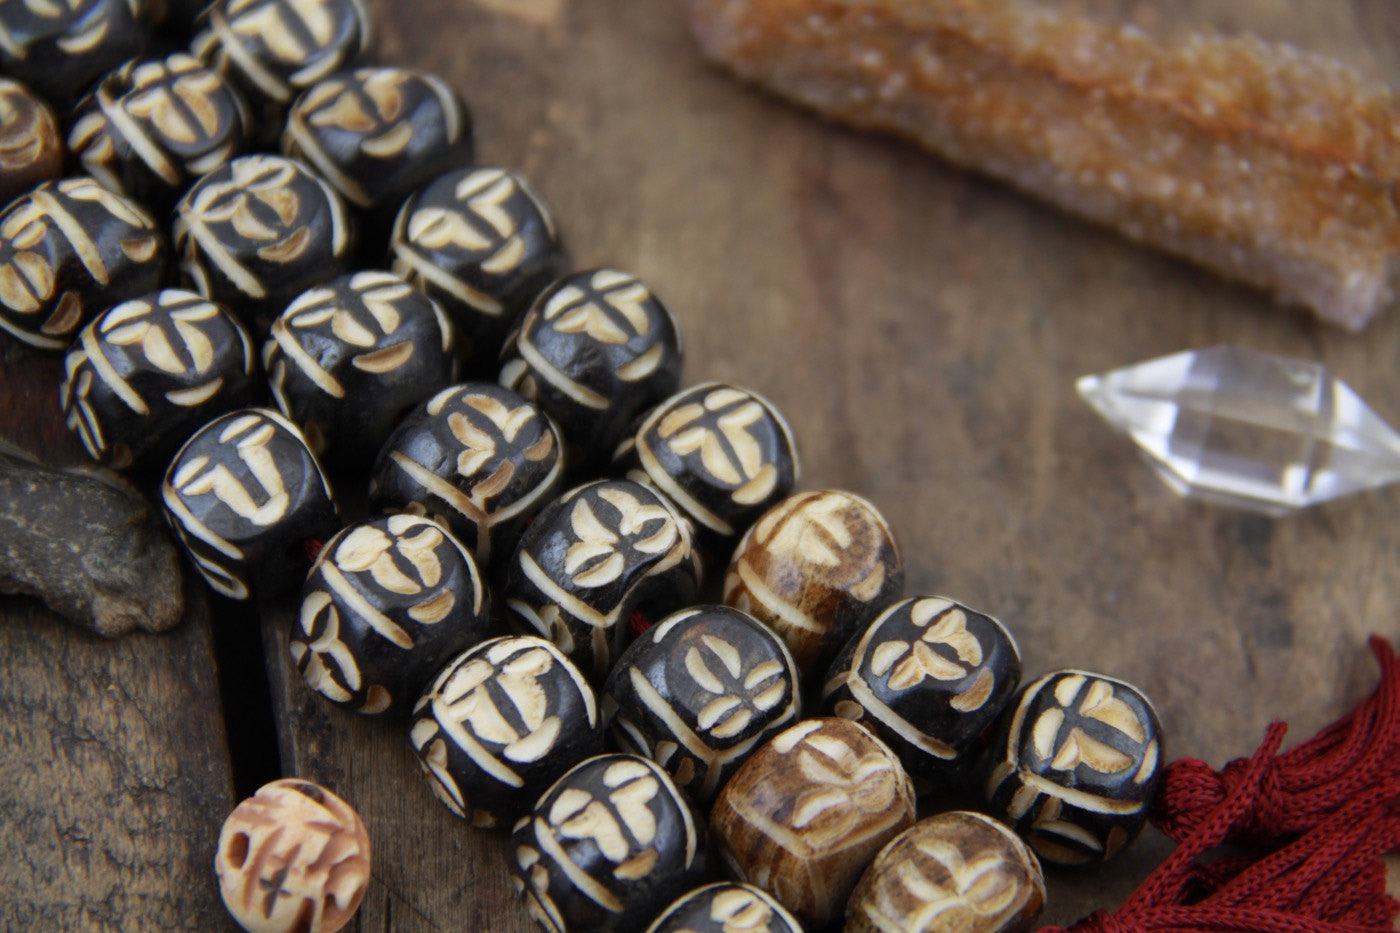 Tribal Totem: Brown & Cream Carved Bone Beads, 12mm, 10 pieces - ShopWomanShopsWorld.com. Bone Beads, Tassels, Pom Poms, African Beads.